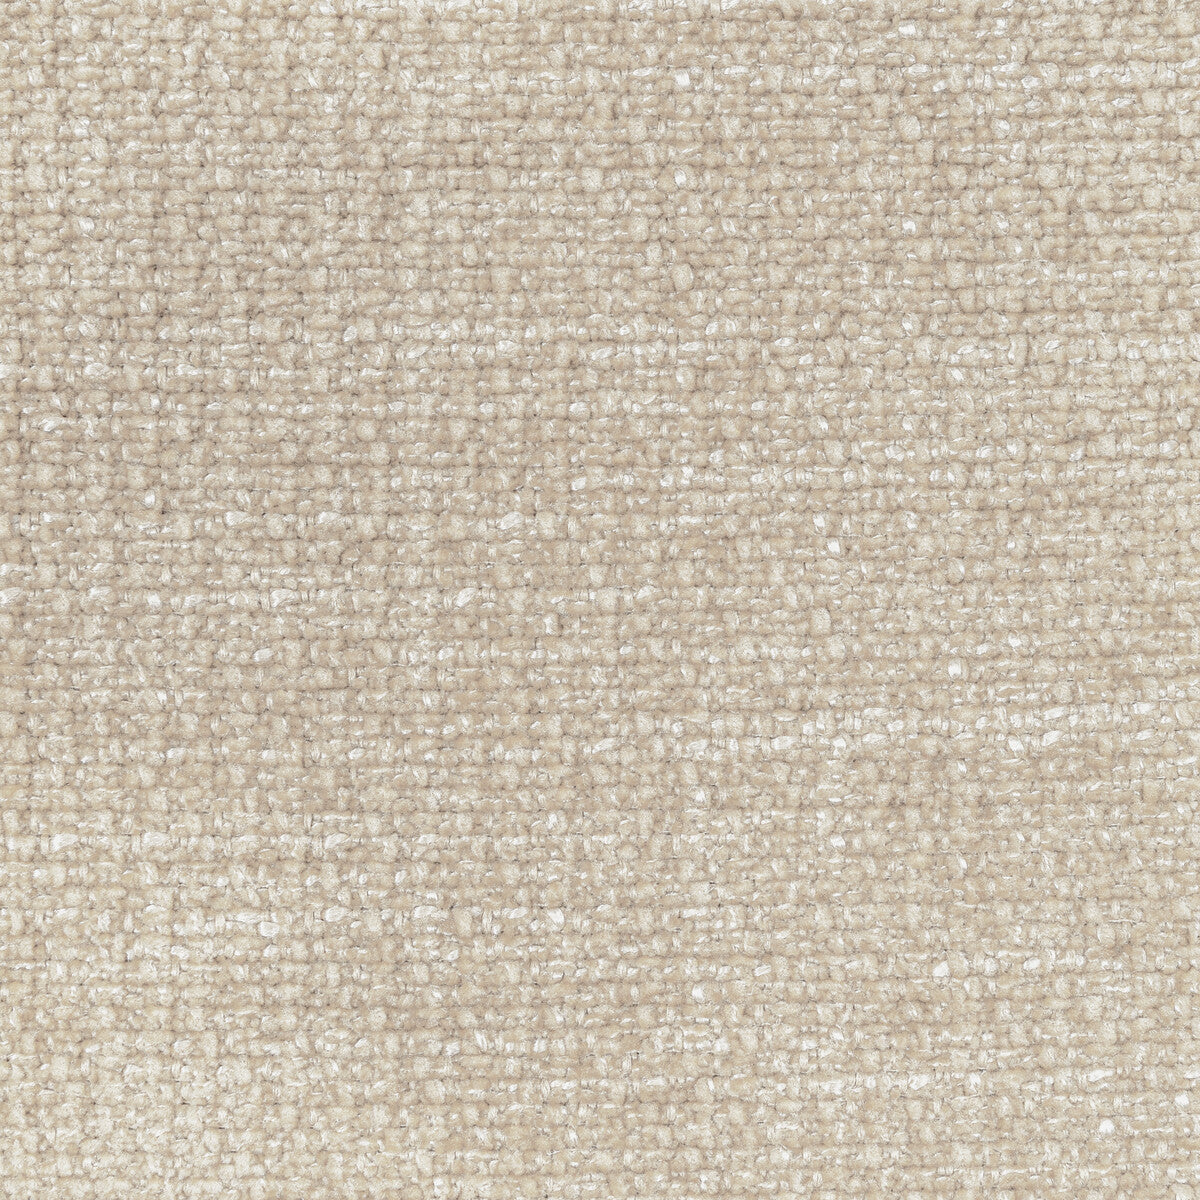 Kravet Smart fabric in 36578-1101 color - pattern 36578.1101.0 - by Kravet Smart in the Performance Kravetarmor collection